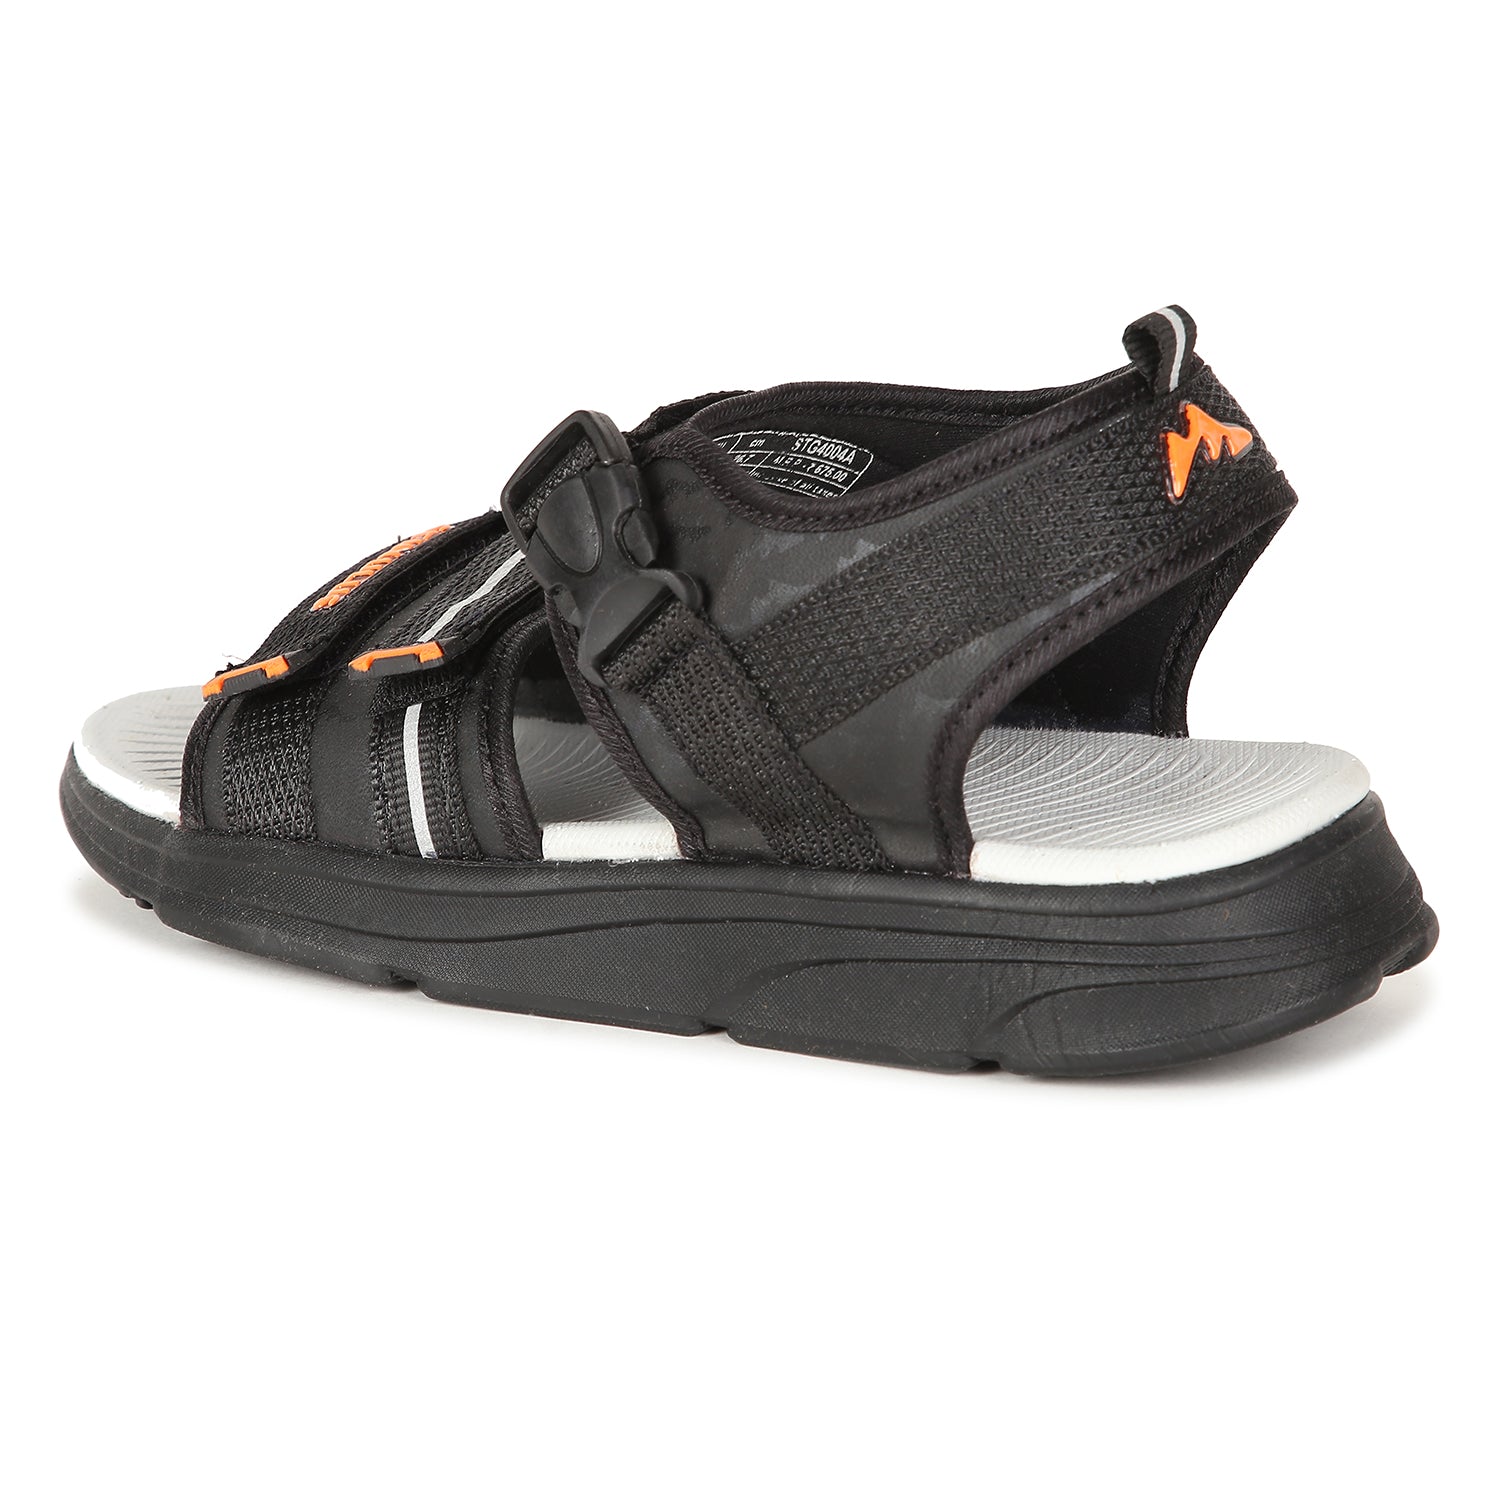 Stimulus FBSTG4004AP Black And Orange Stylish Lightweight Dailywear Sports Sandals For Men